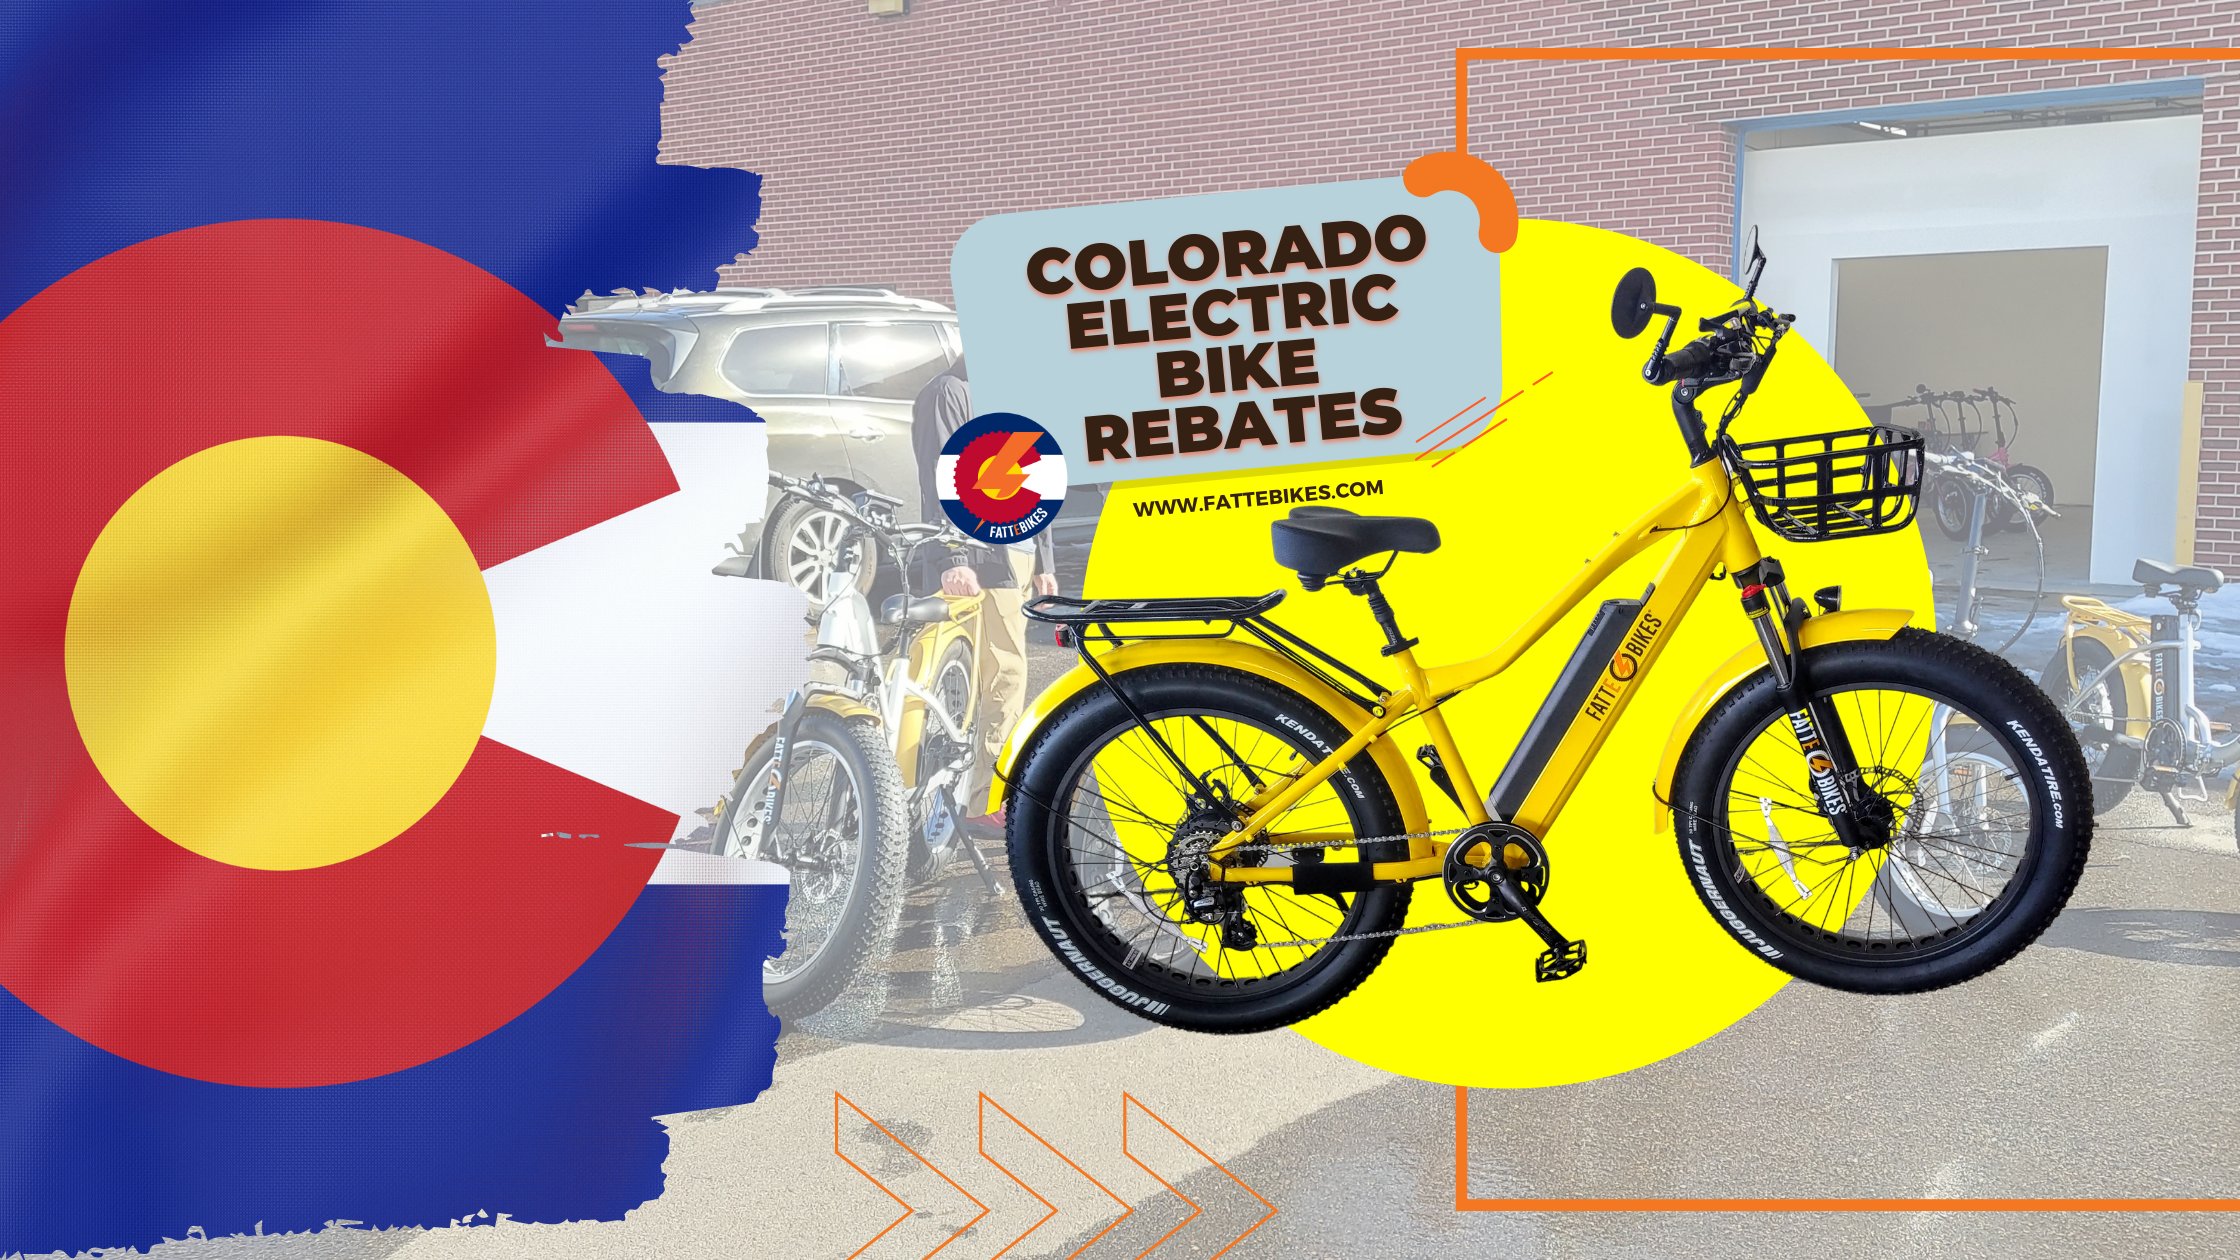 Colorado Electric Bike Rebates